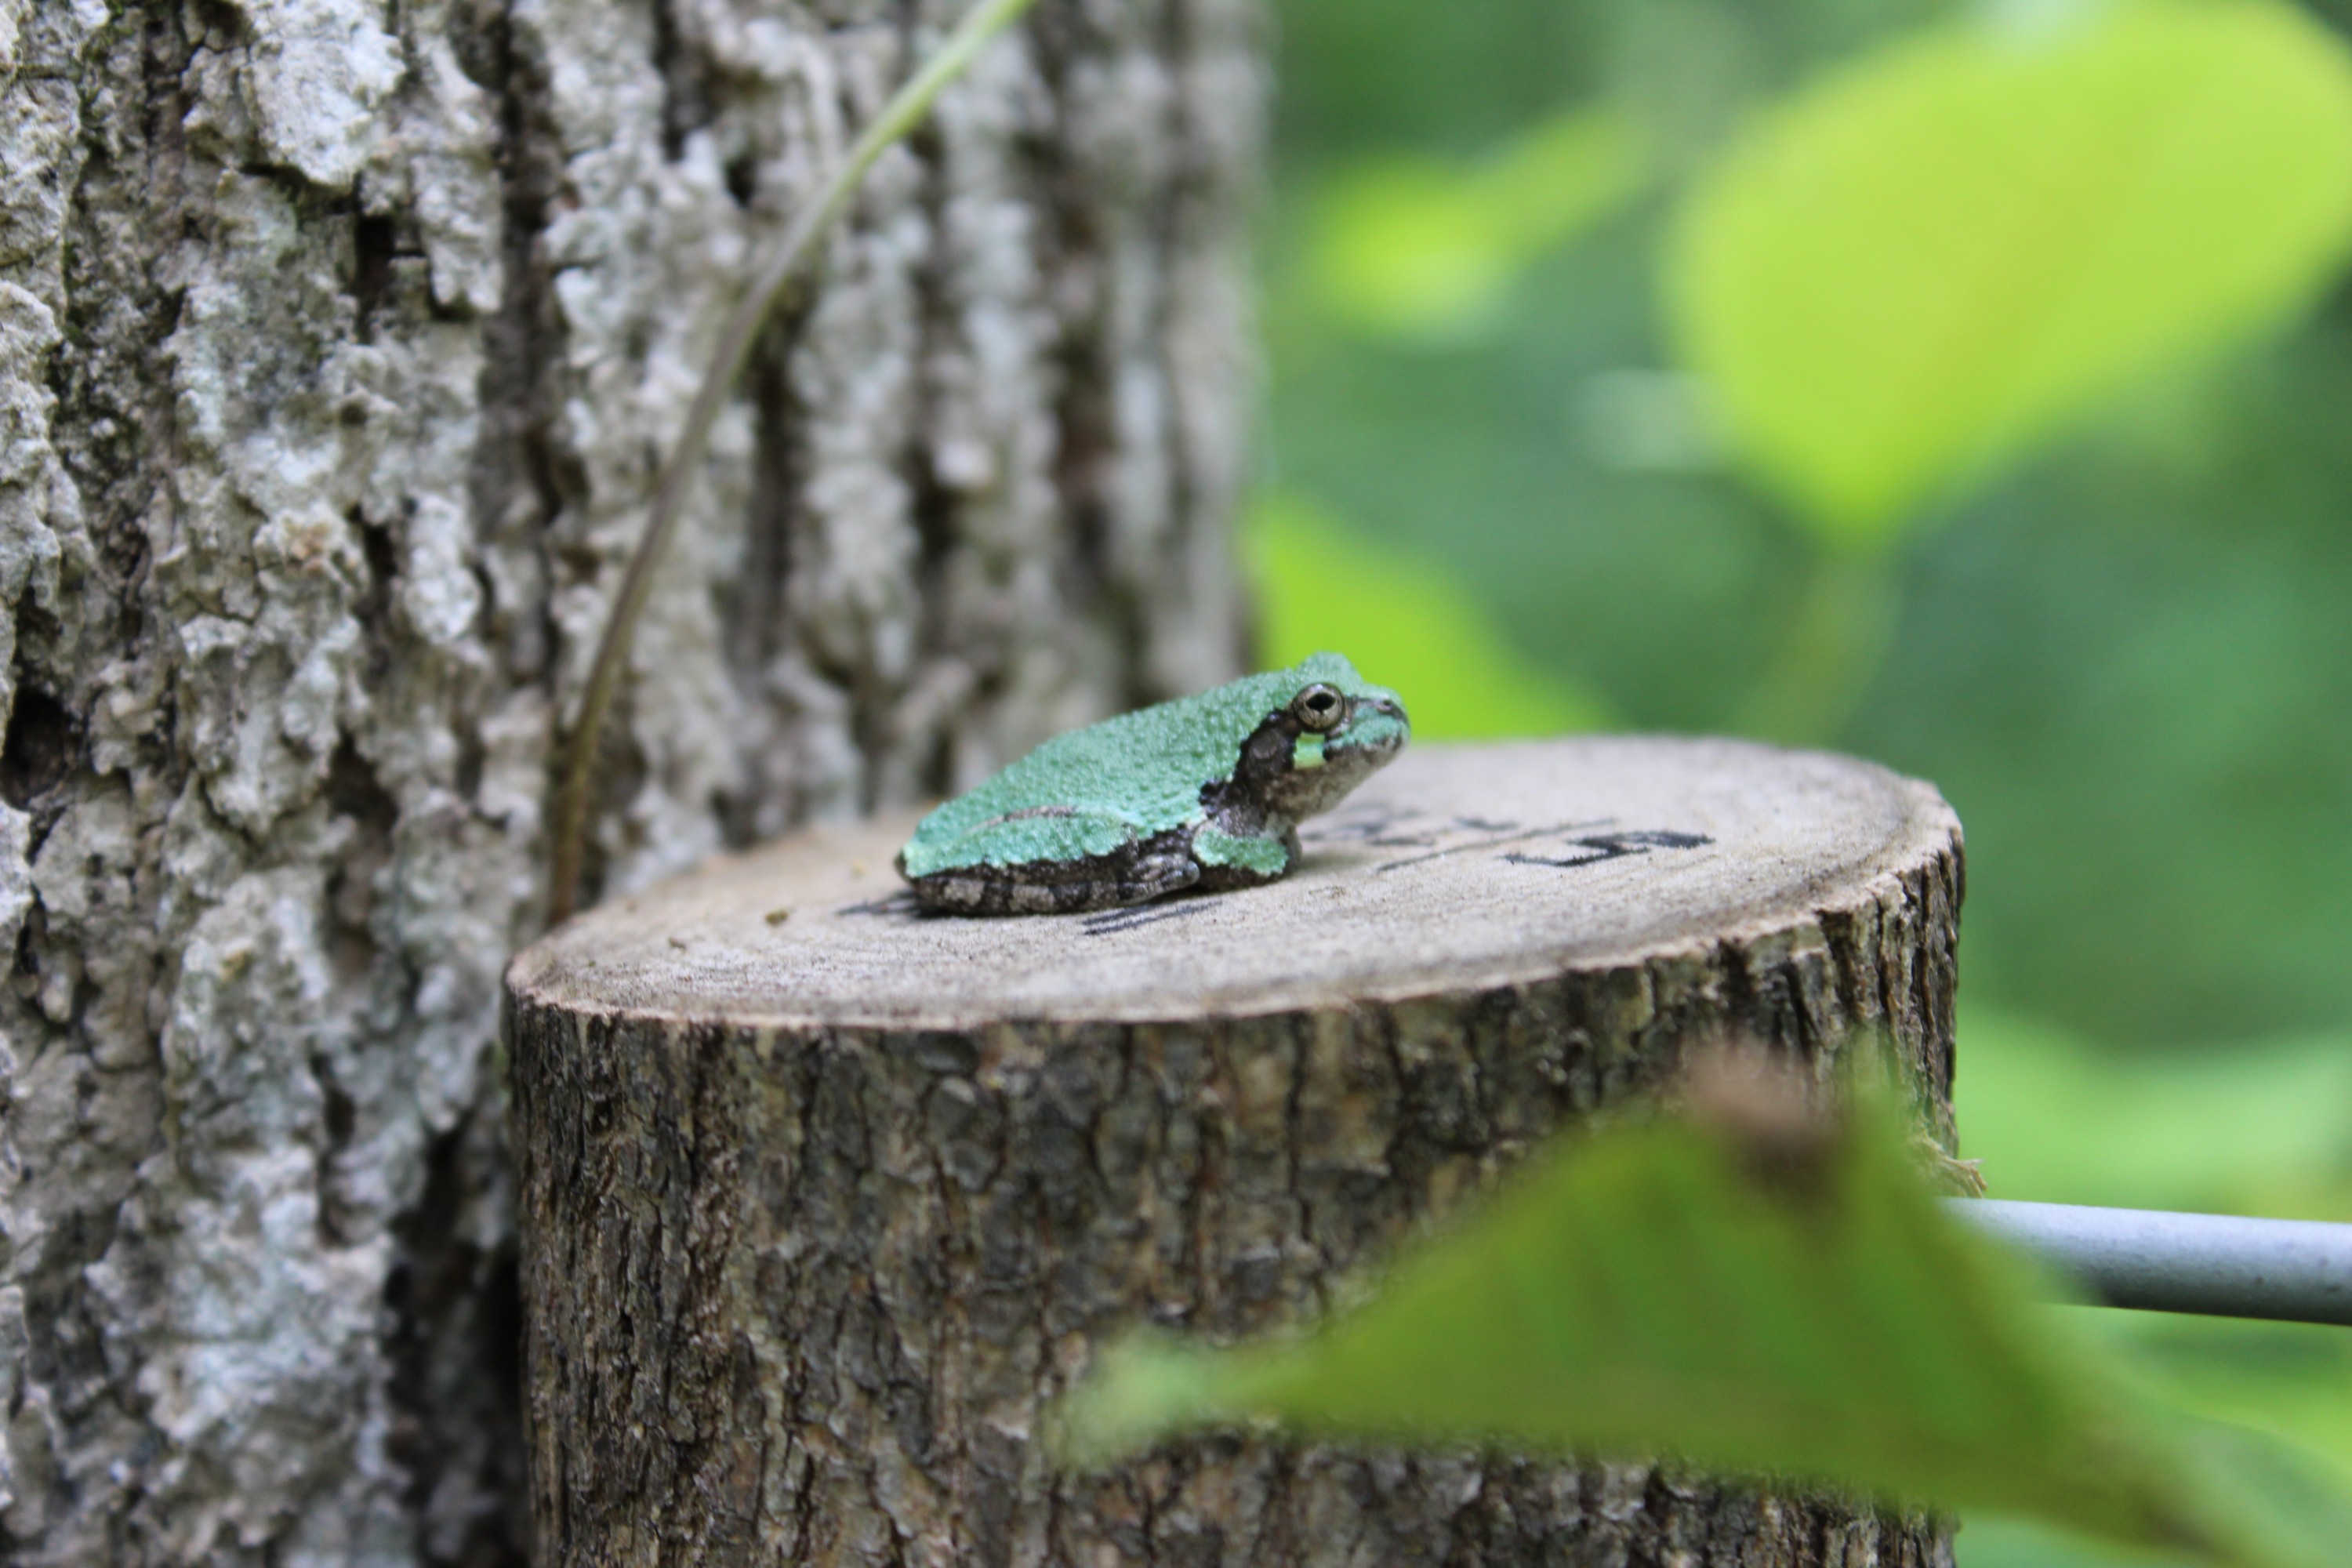 A frog at the Bog